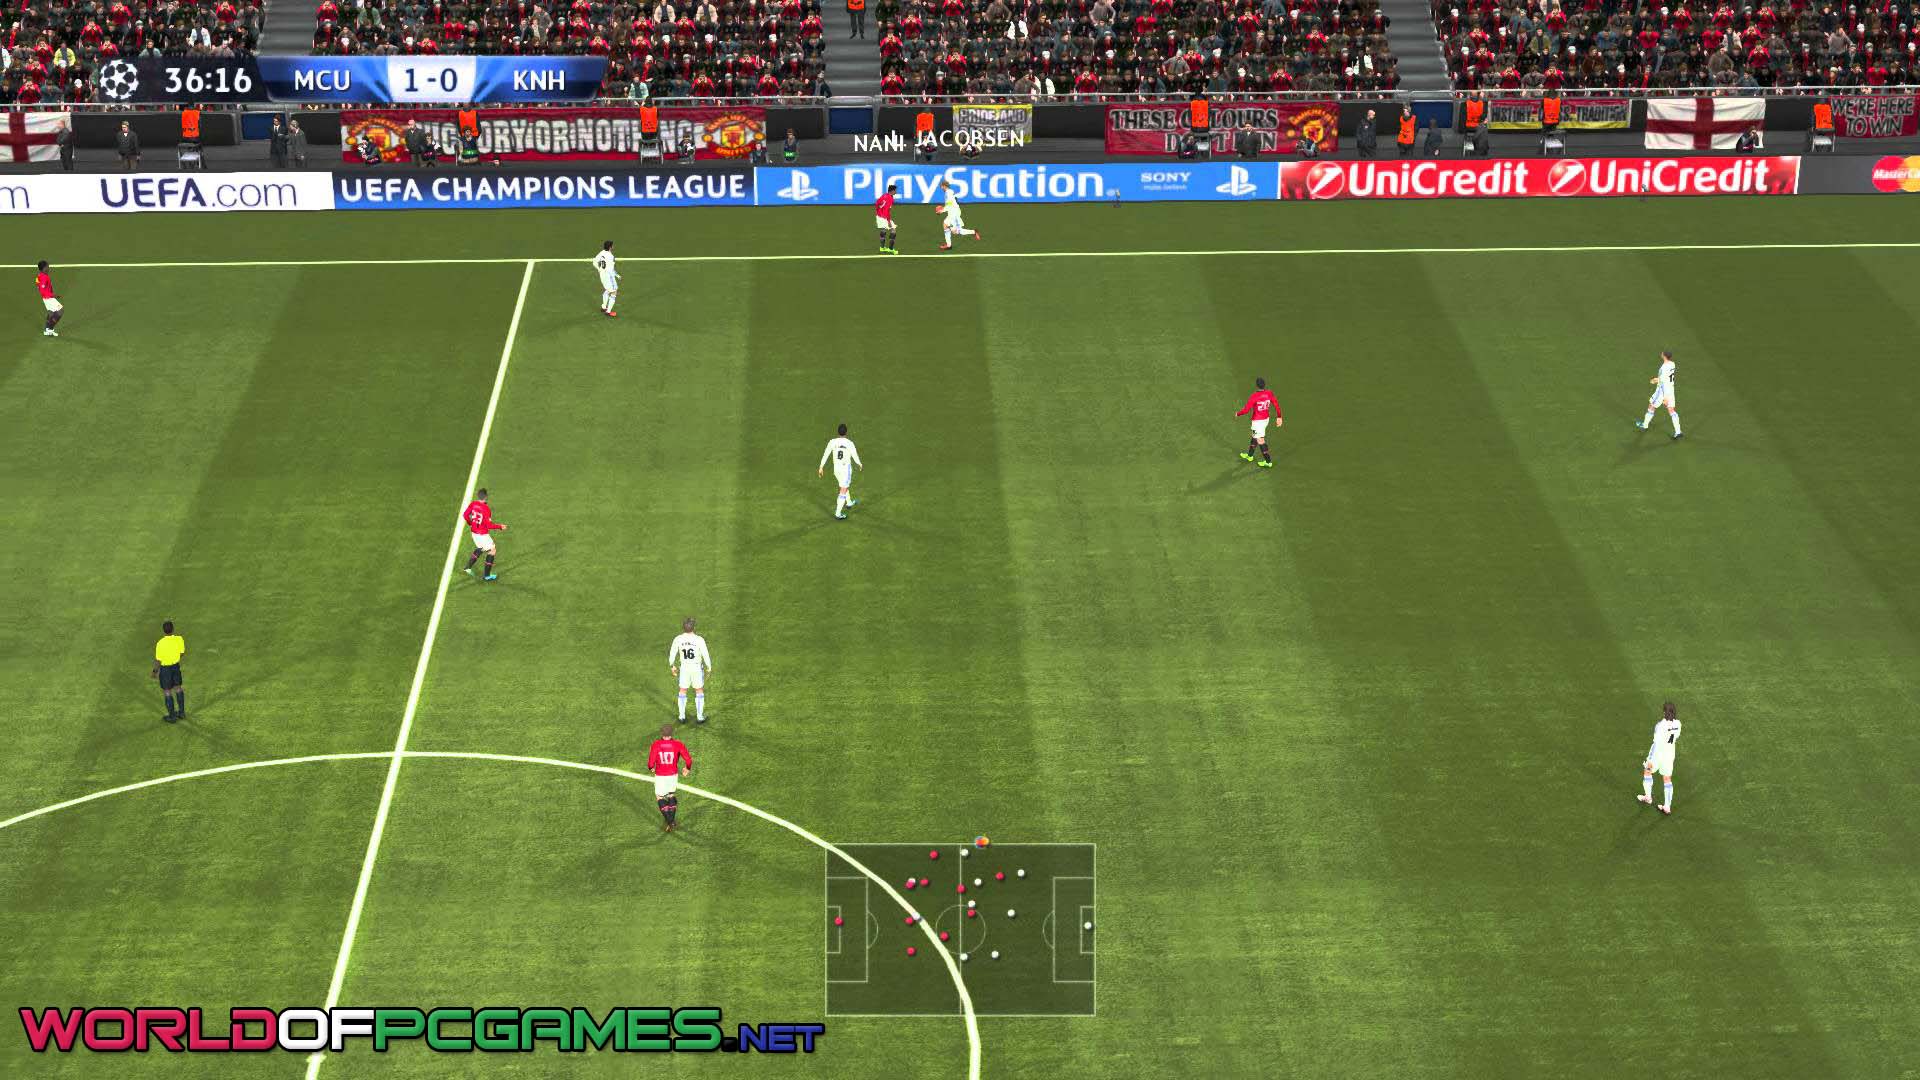 Pro Evolution Soccer Free Download By worldof-pcgames.net